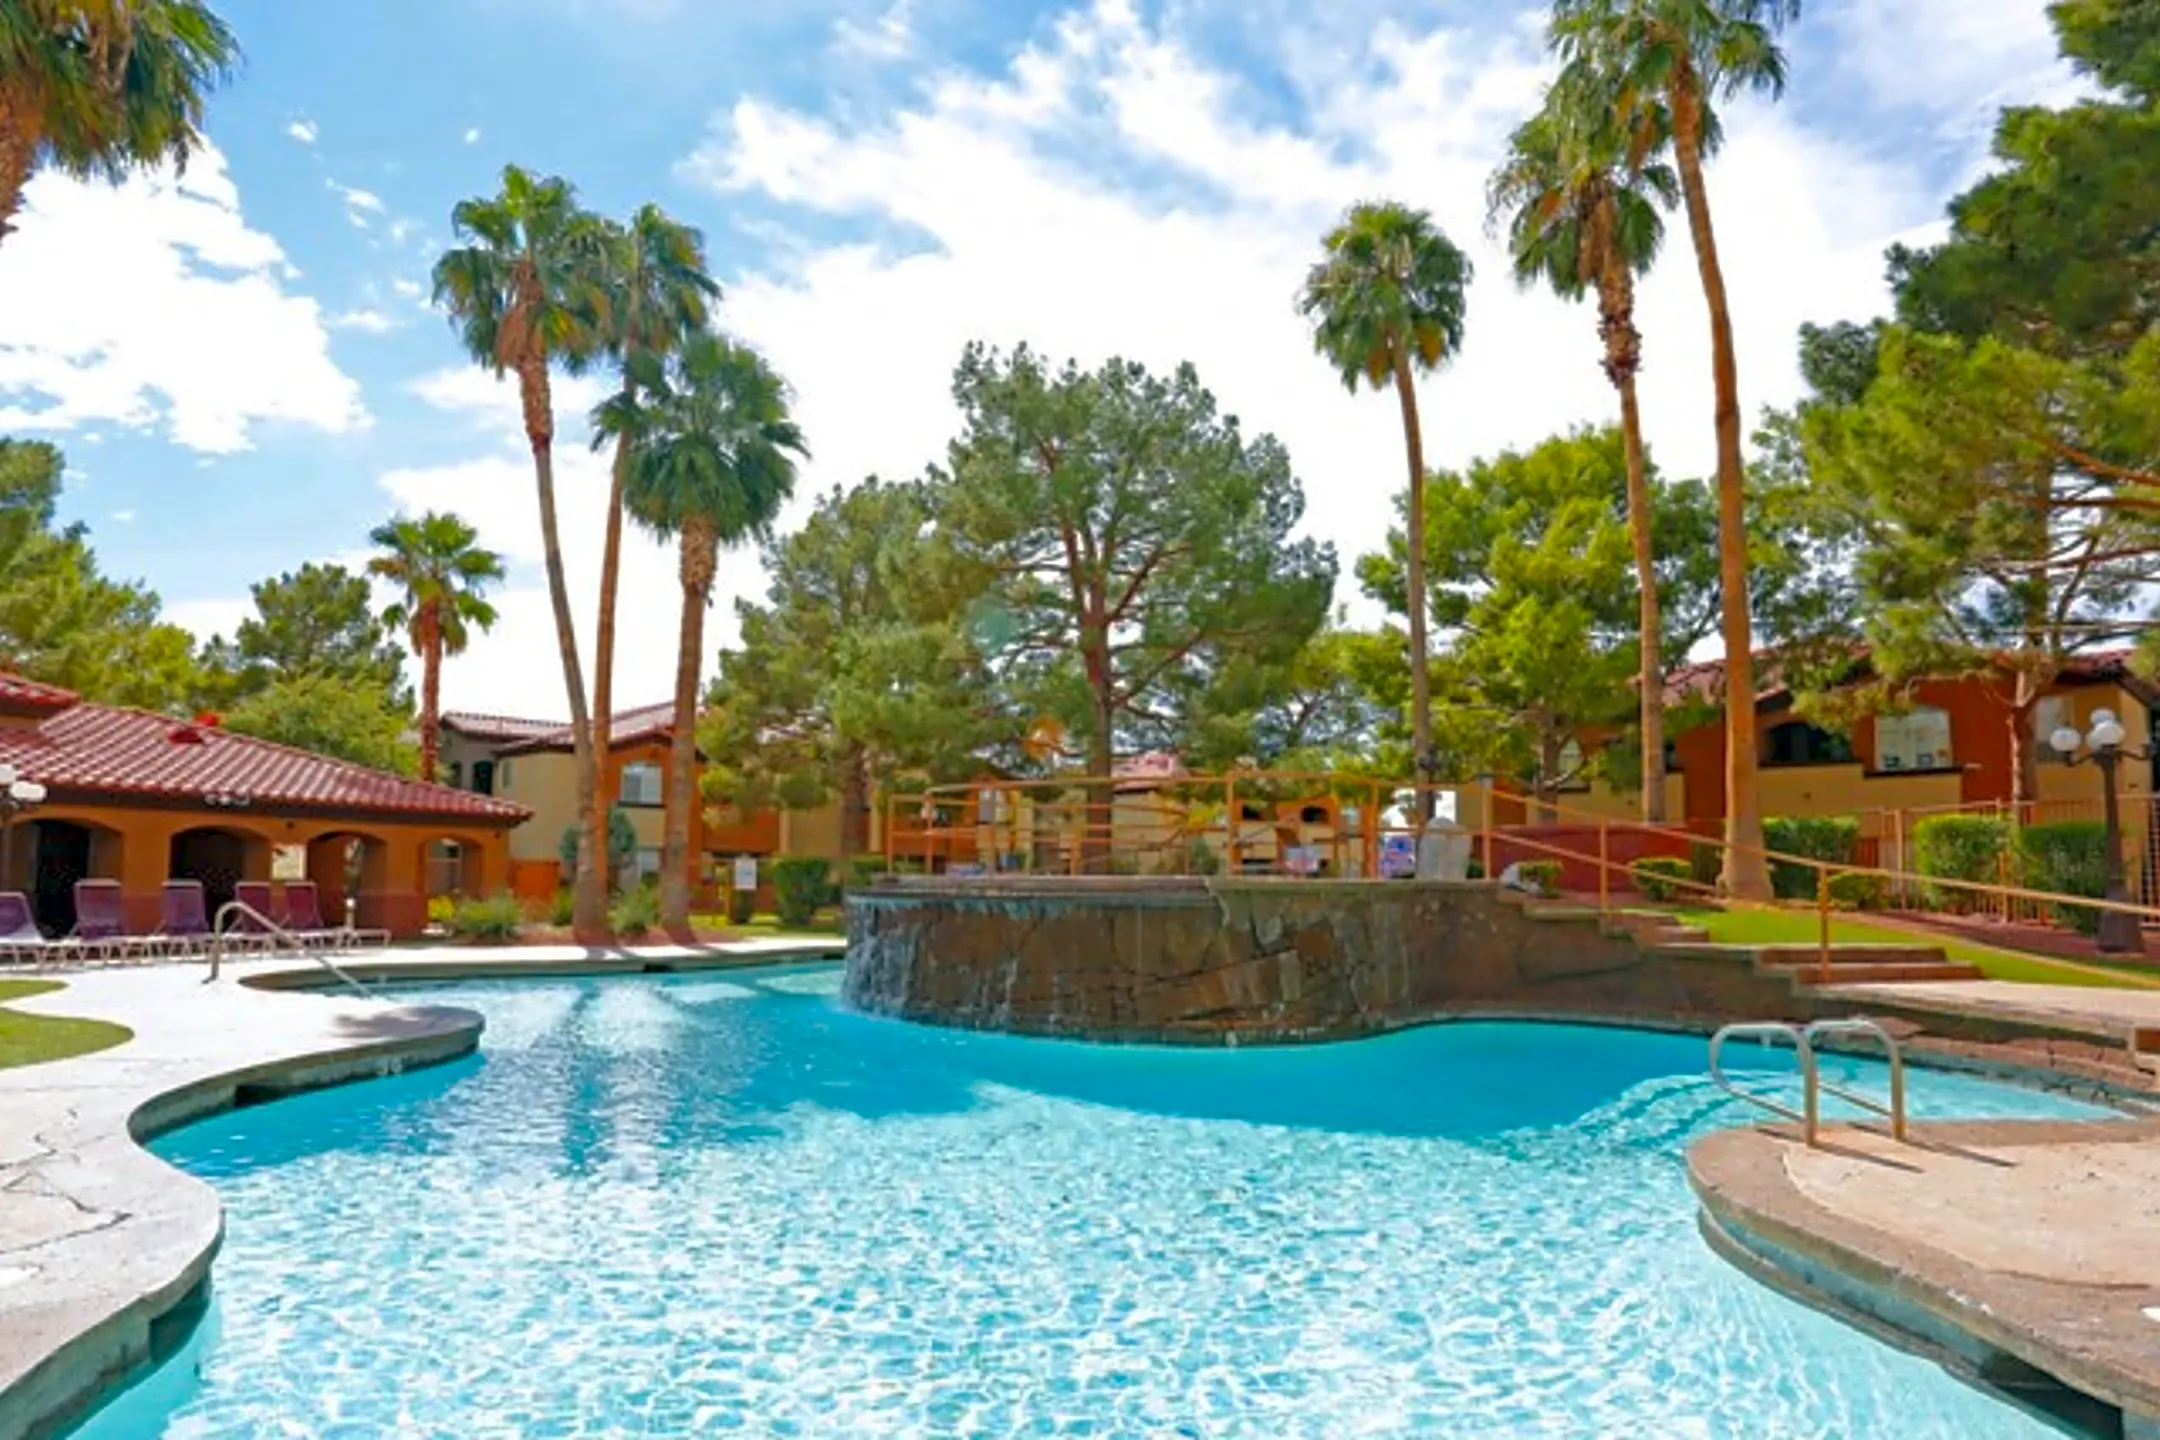 Pool - Maravilla Apartments - Las Vegas, NV